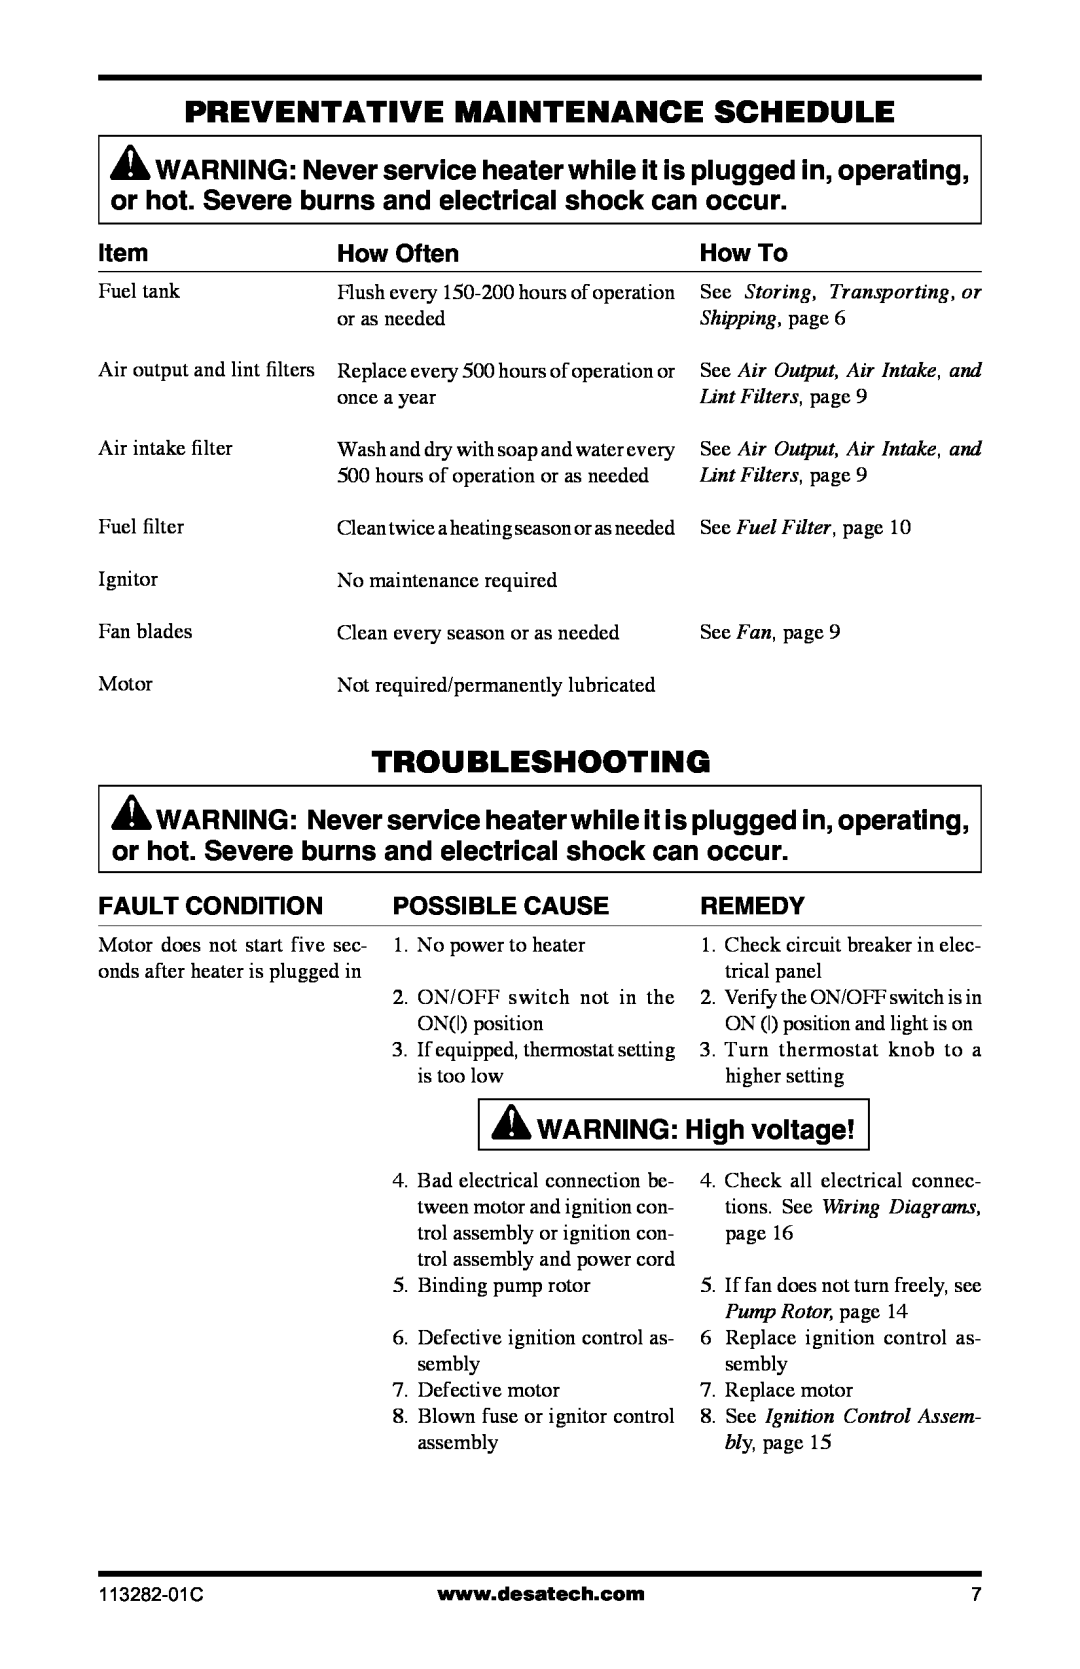 Desa BTU/HR owner manual Preventative Maintenance Schedule, Troubleshooting 